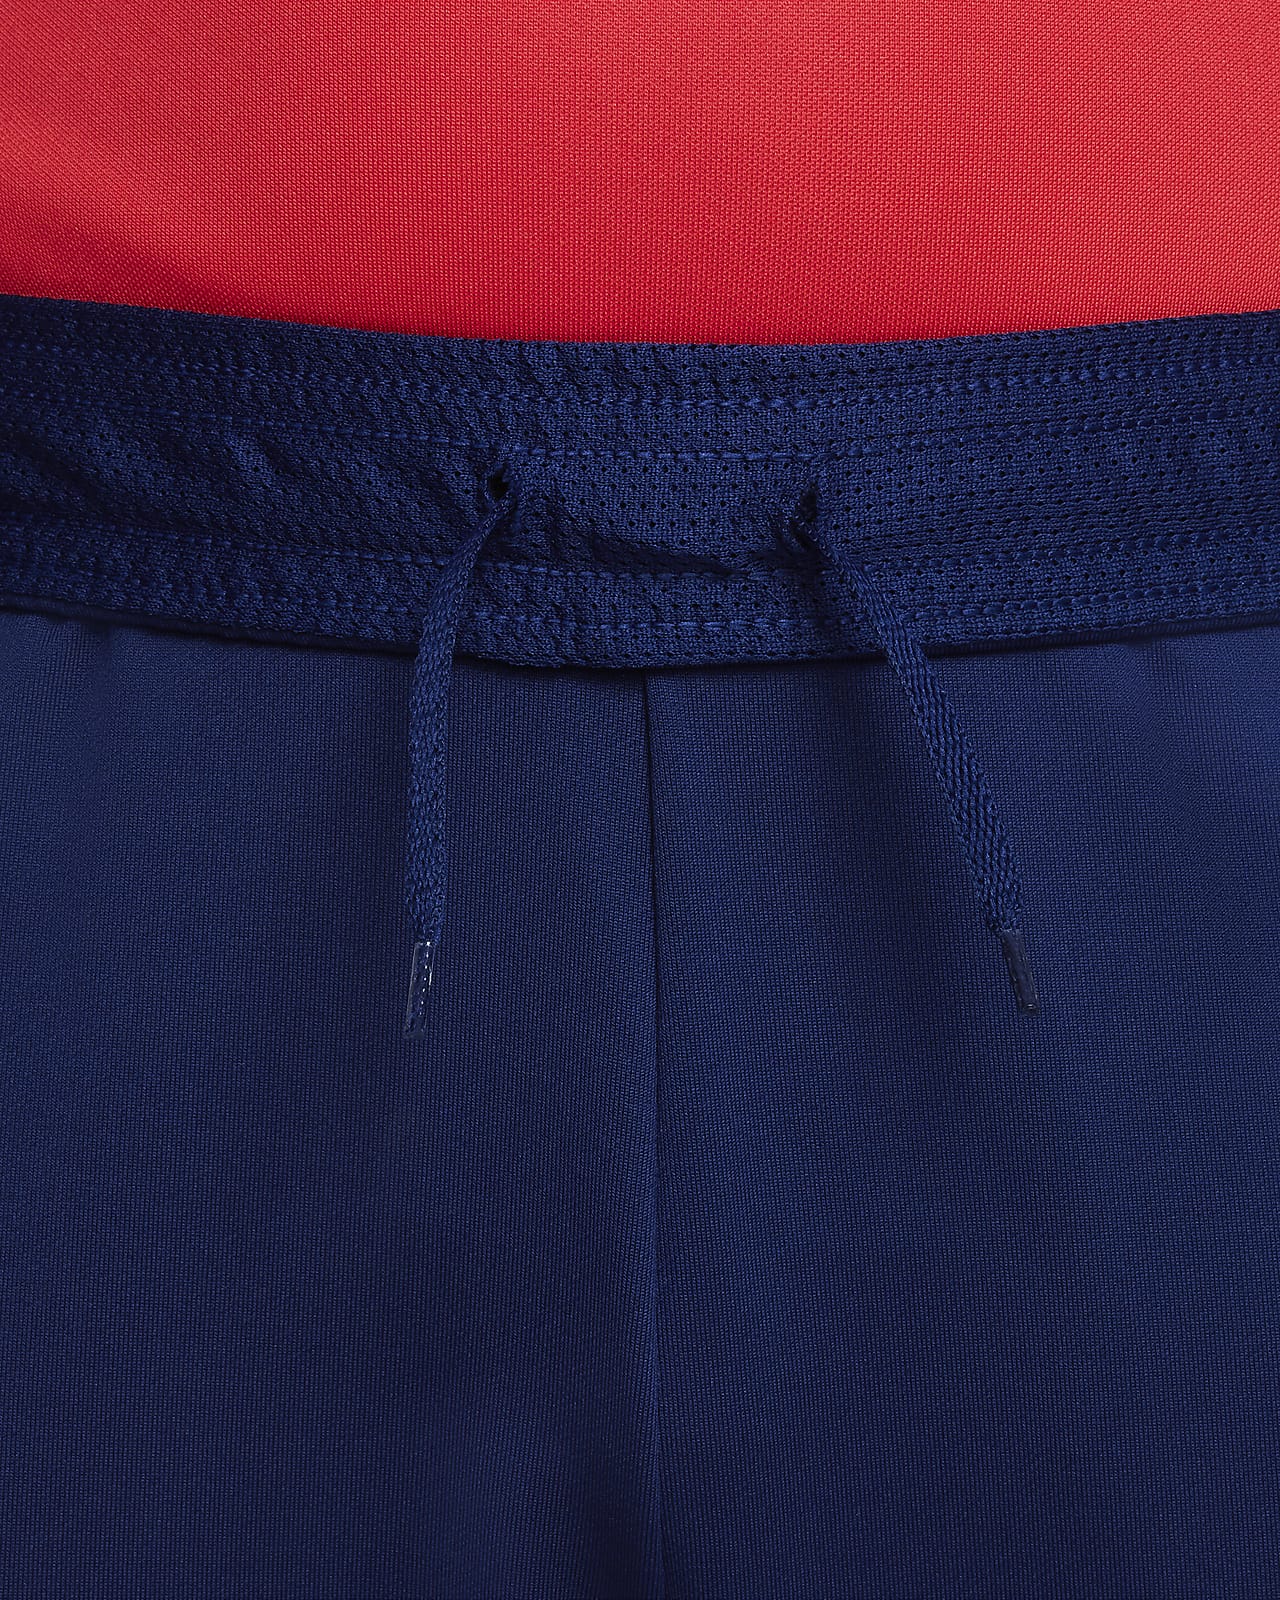 Boys Nike Sweatpants | eBay